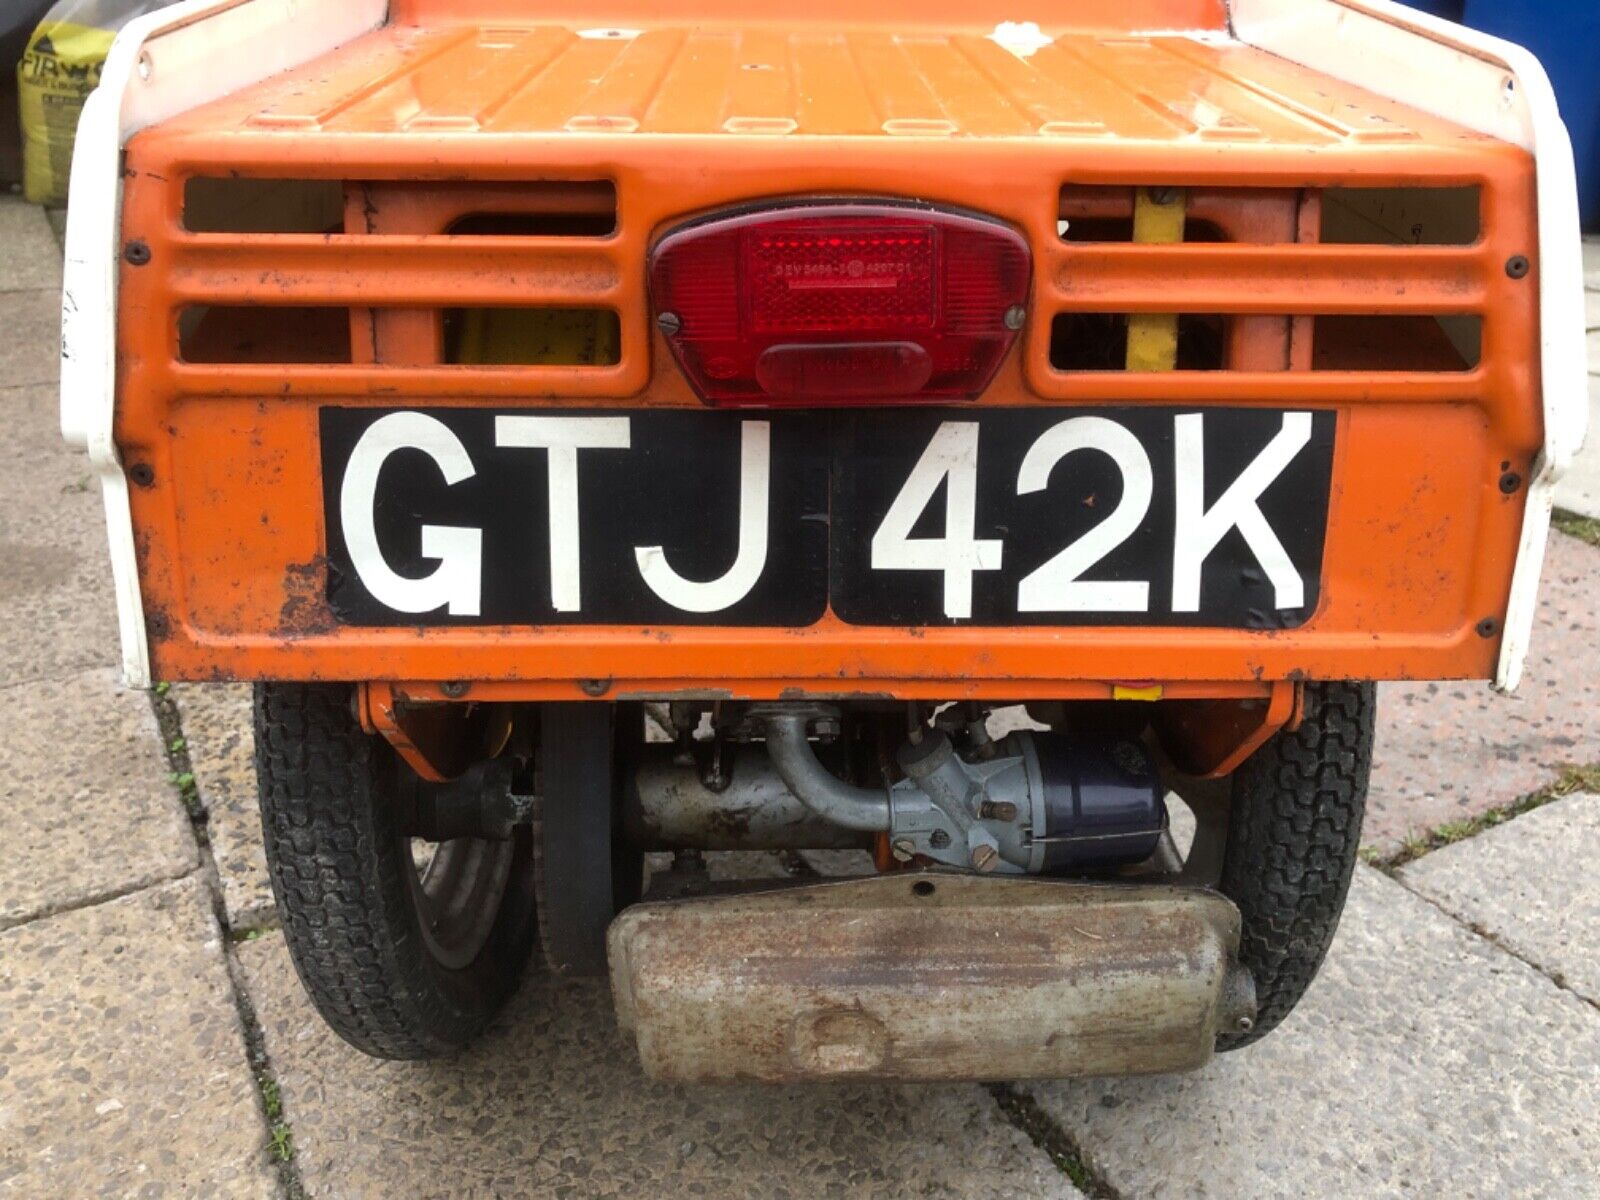 GTJ 42 K